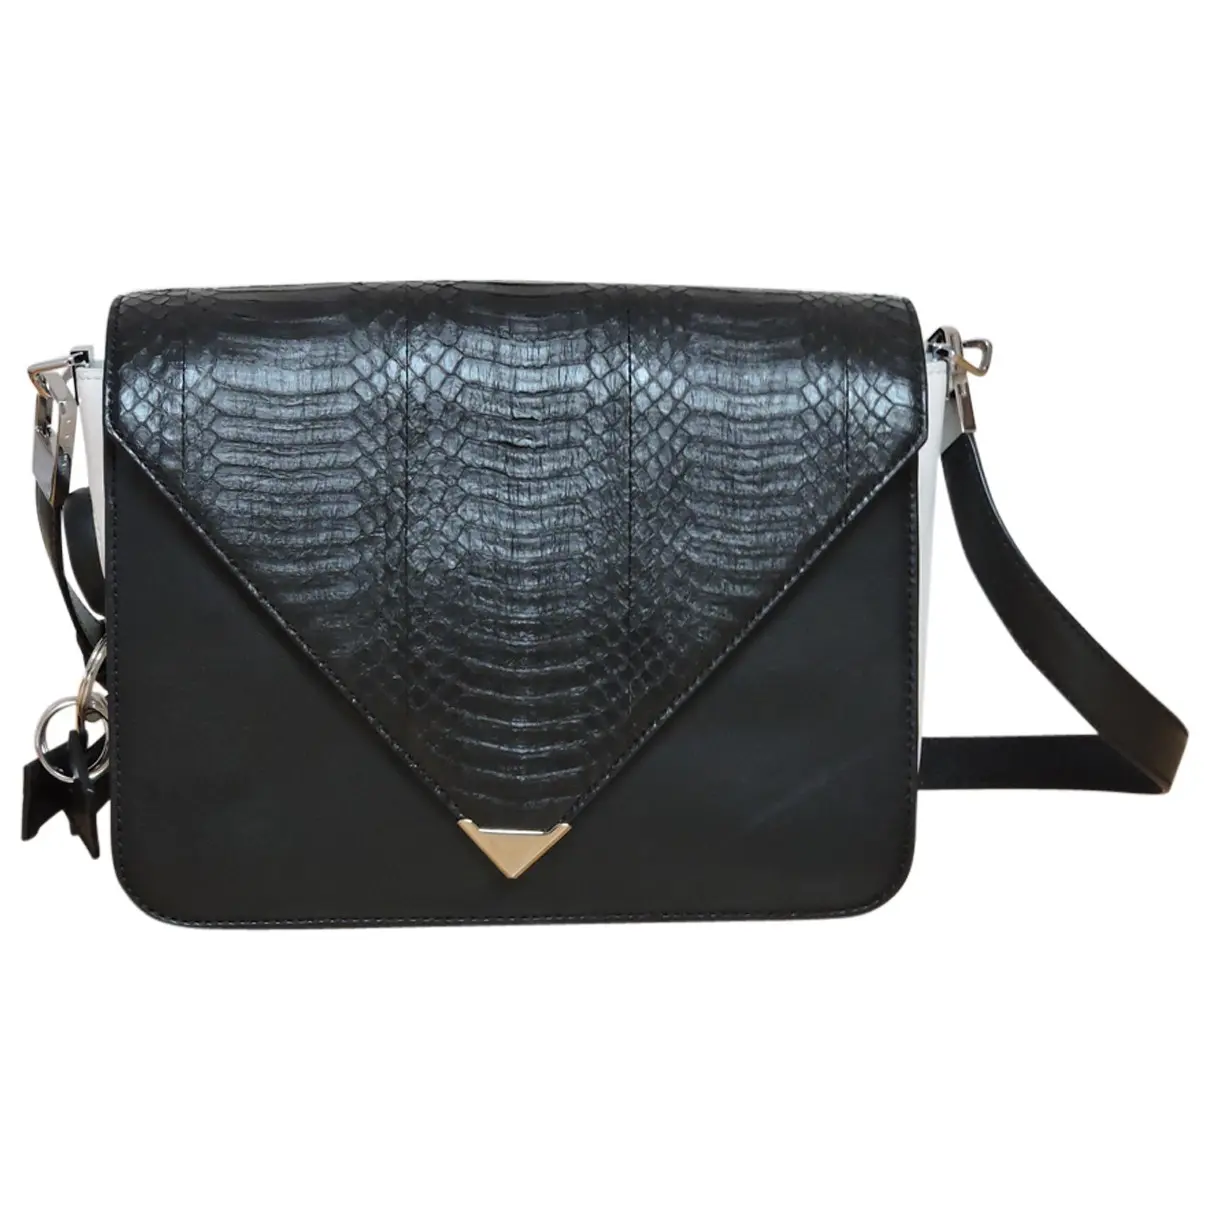 Black Leather Handbag Prisma Alexander Wang